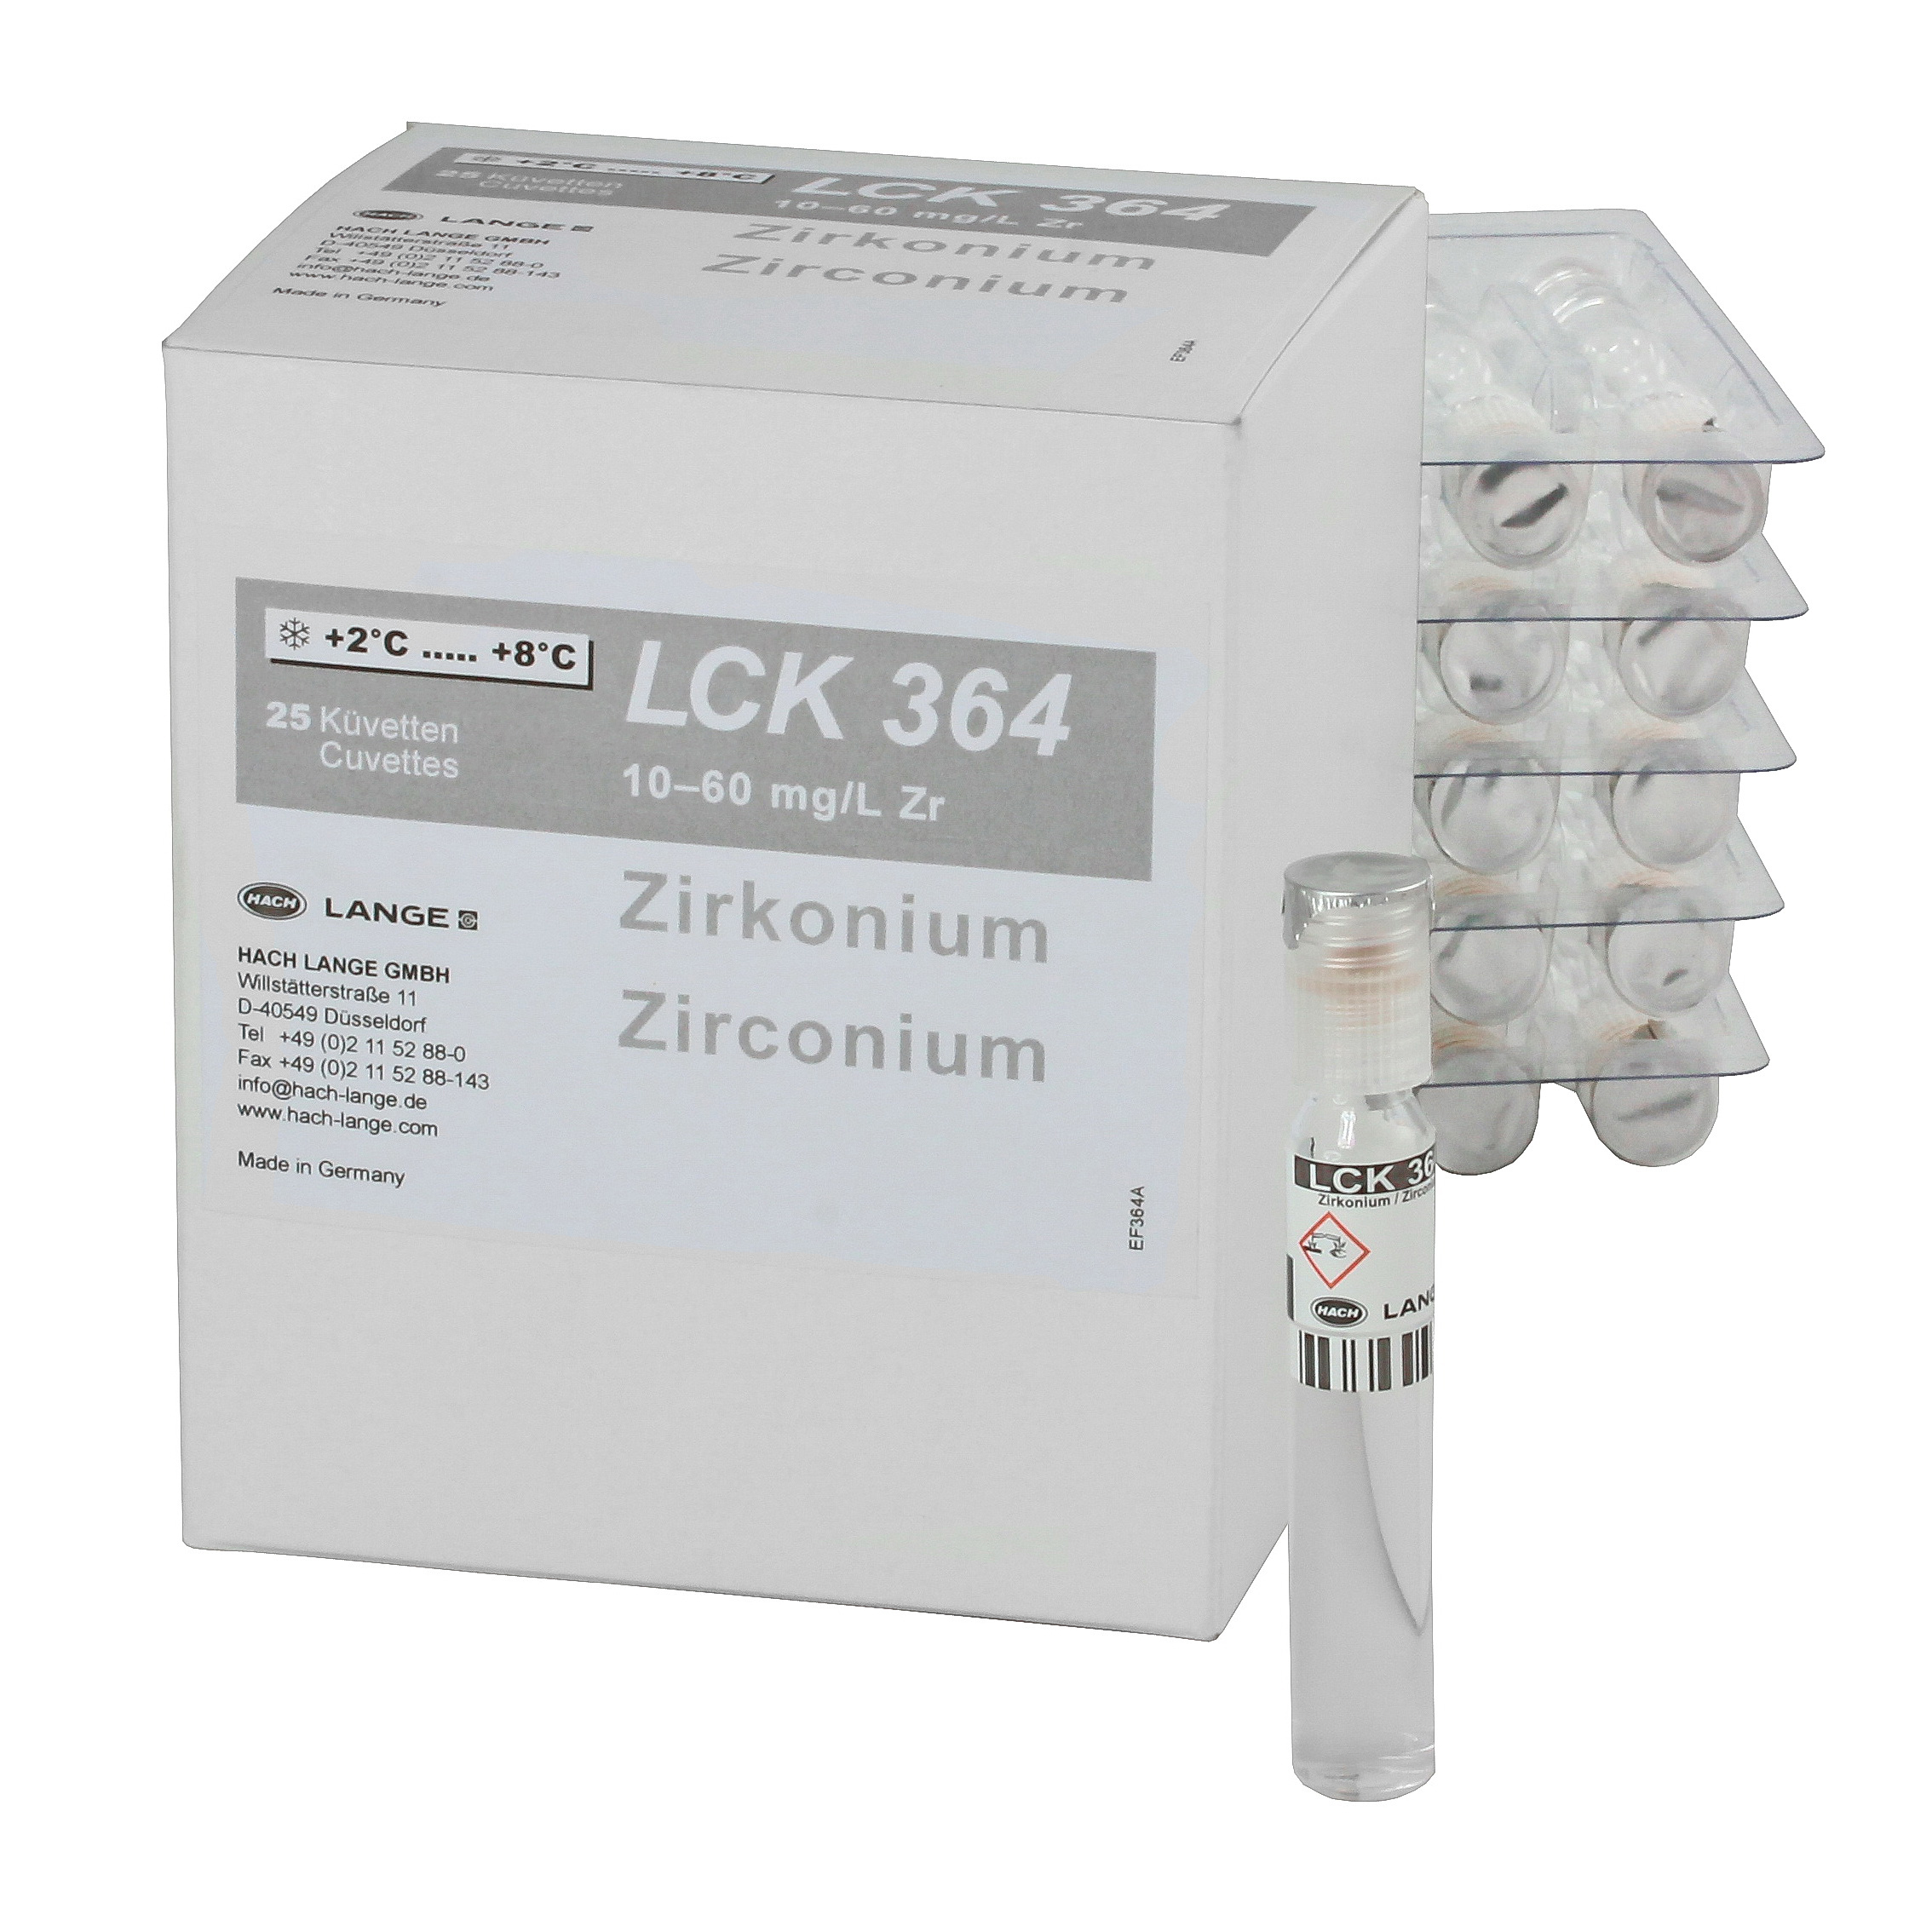 Lancio nuovo prodotto LCK364 Zirconio